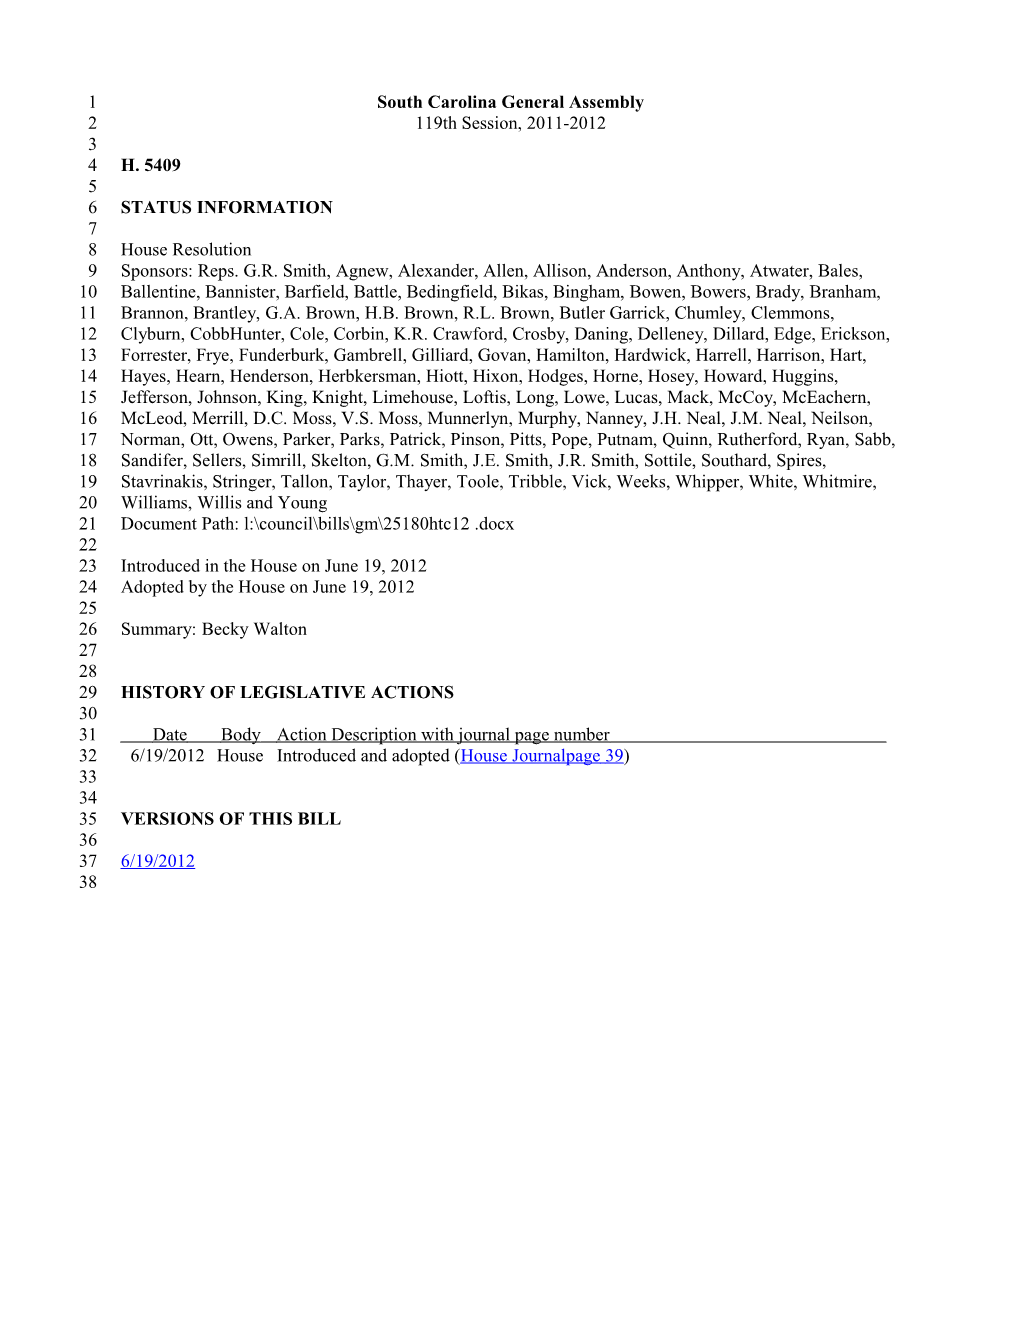 2011-2012 Bill 5409: Becky Walton - South Carolina Legislature Online